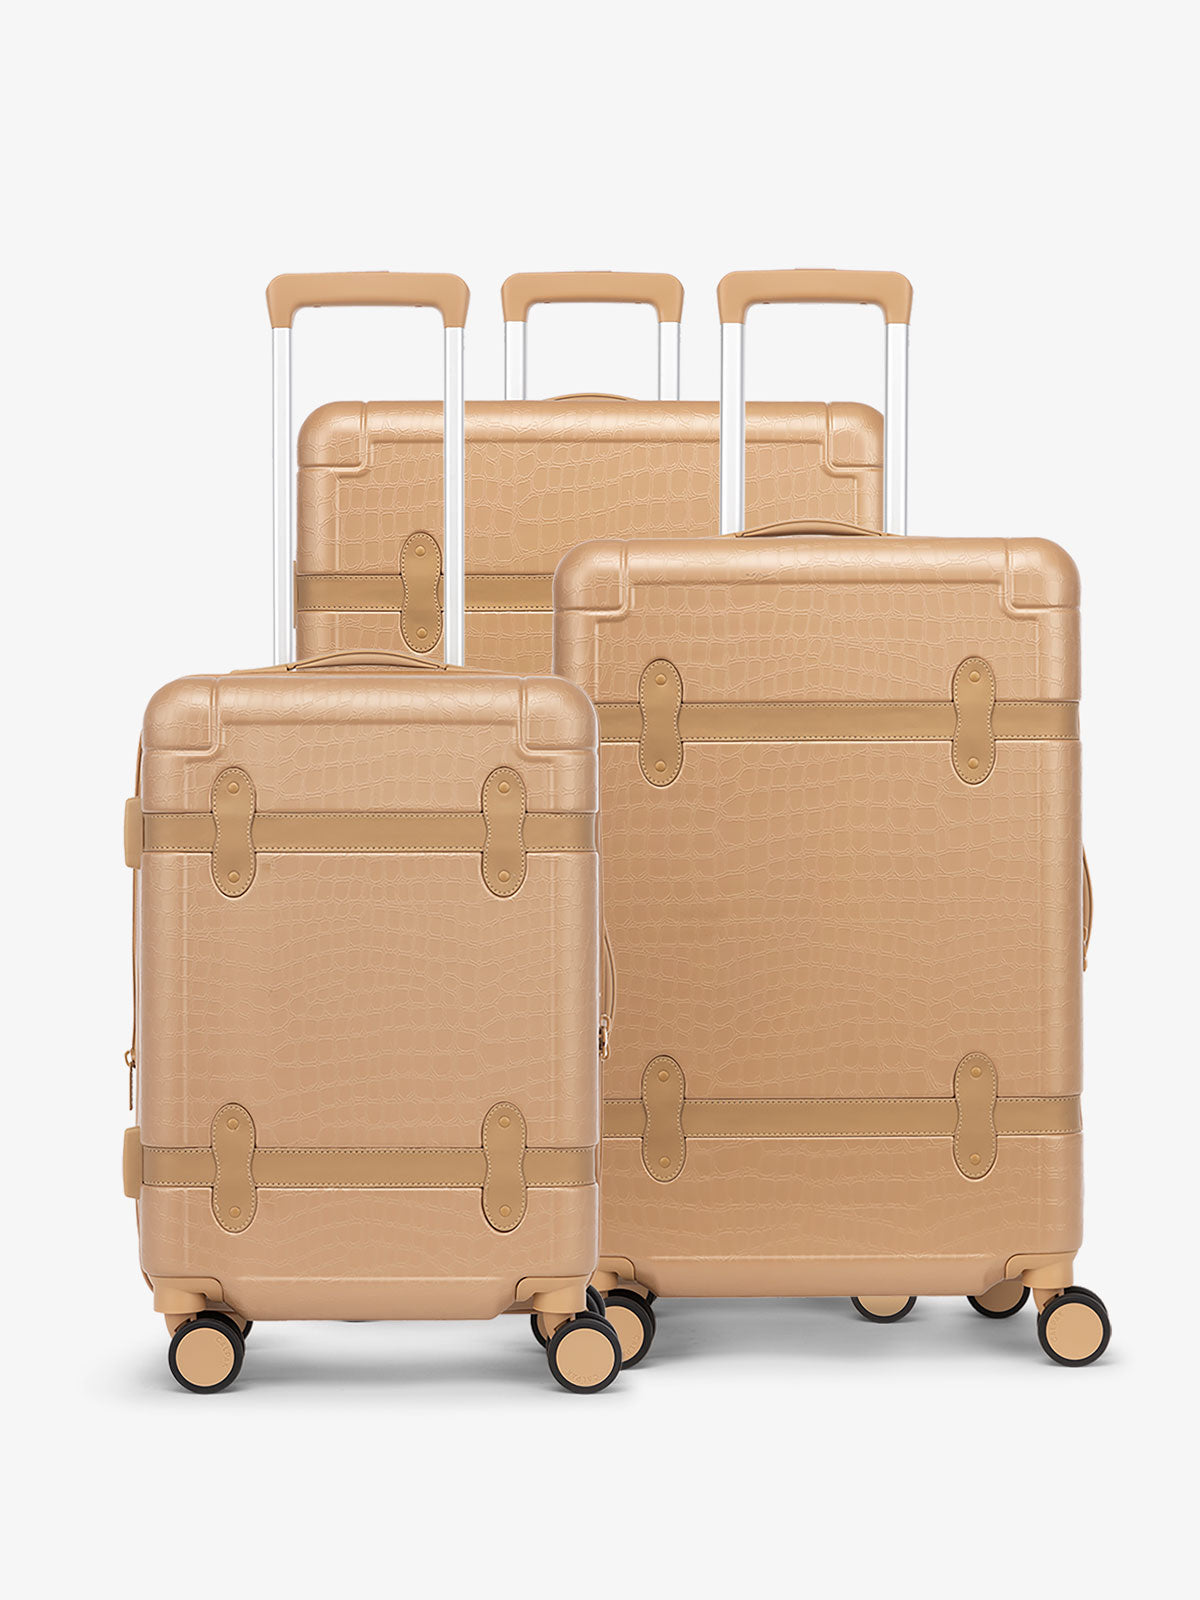 CALPAK set of 3 Trnk beige almond luggage in vintage trunk style